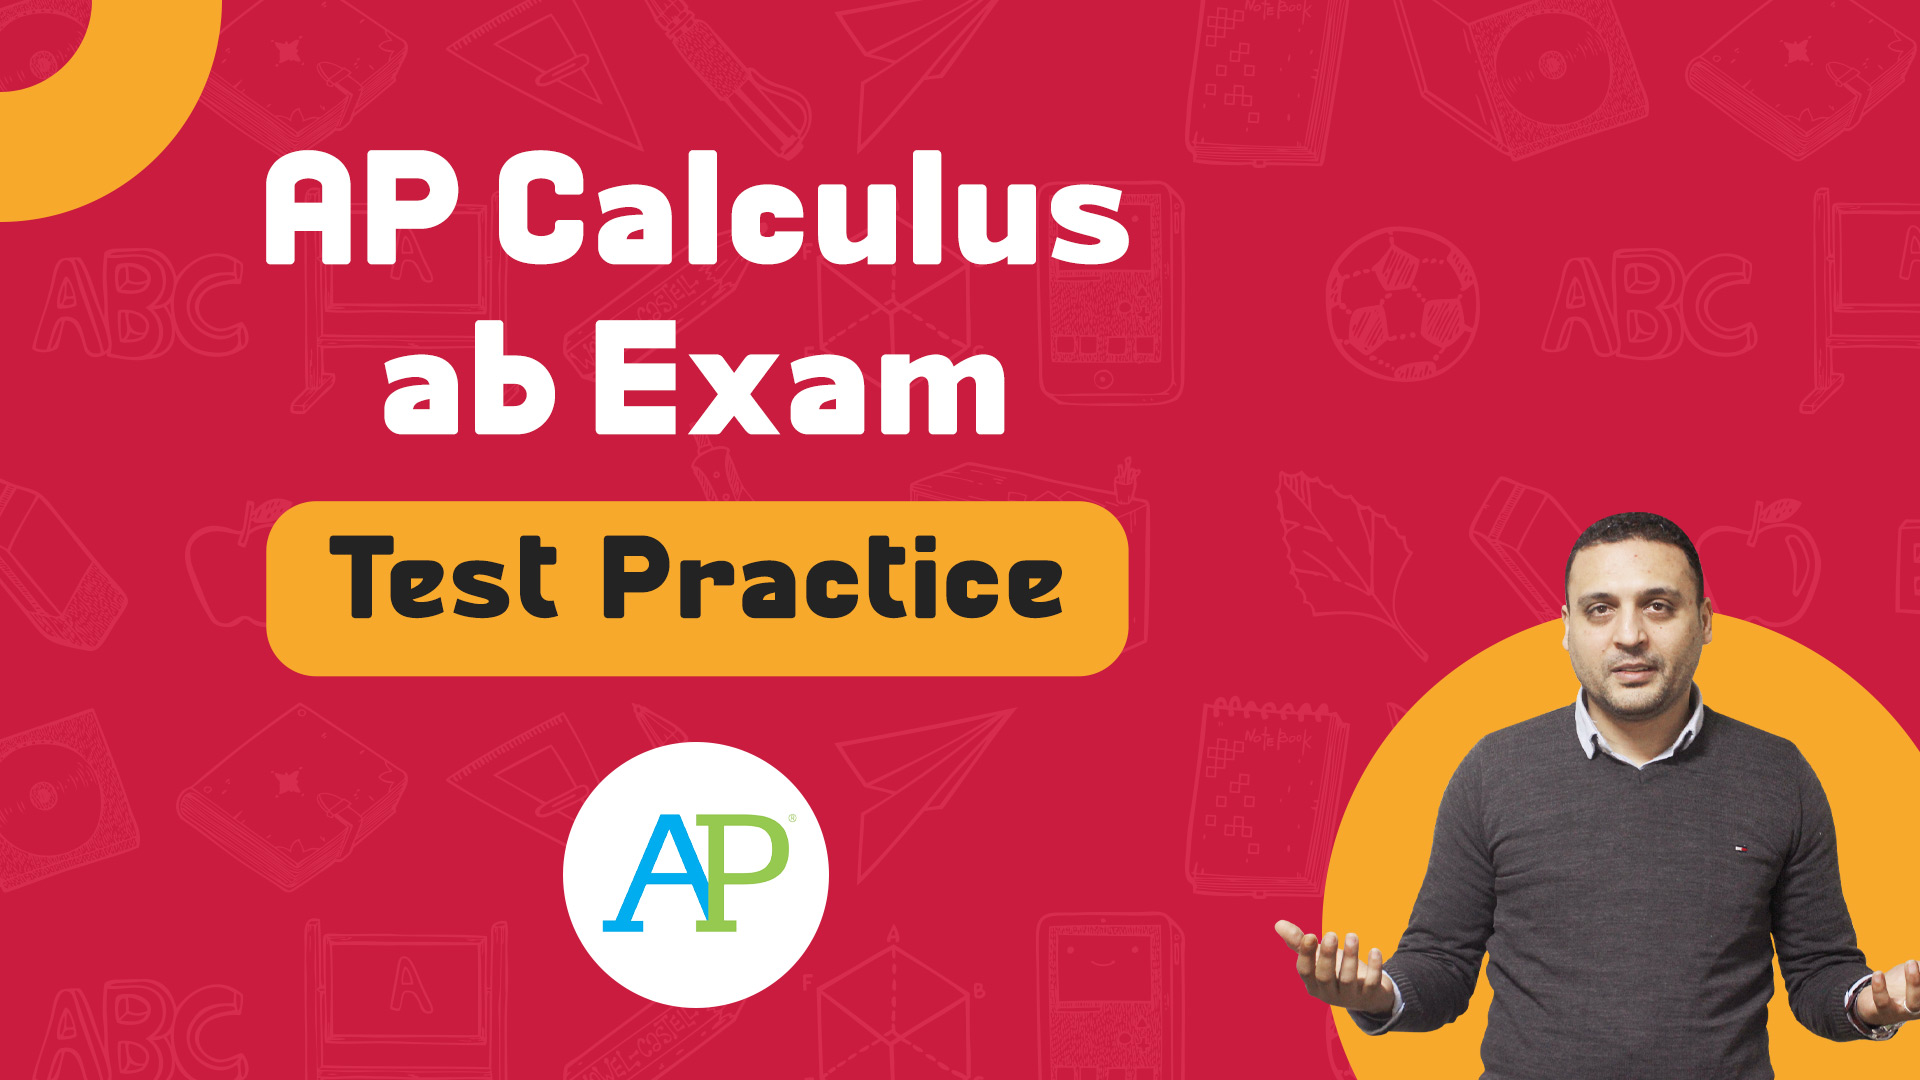 AP Calculus ab Exam test practice Dr. Ahmed Hassan